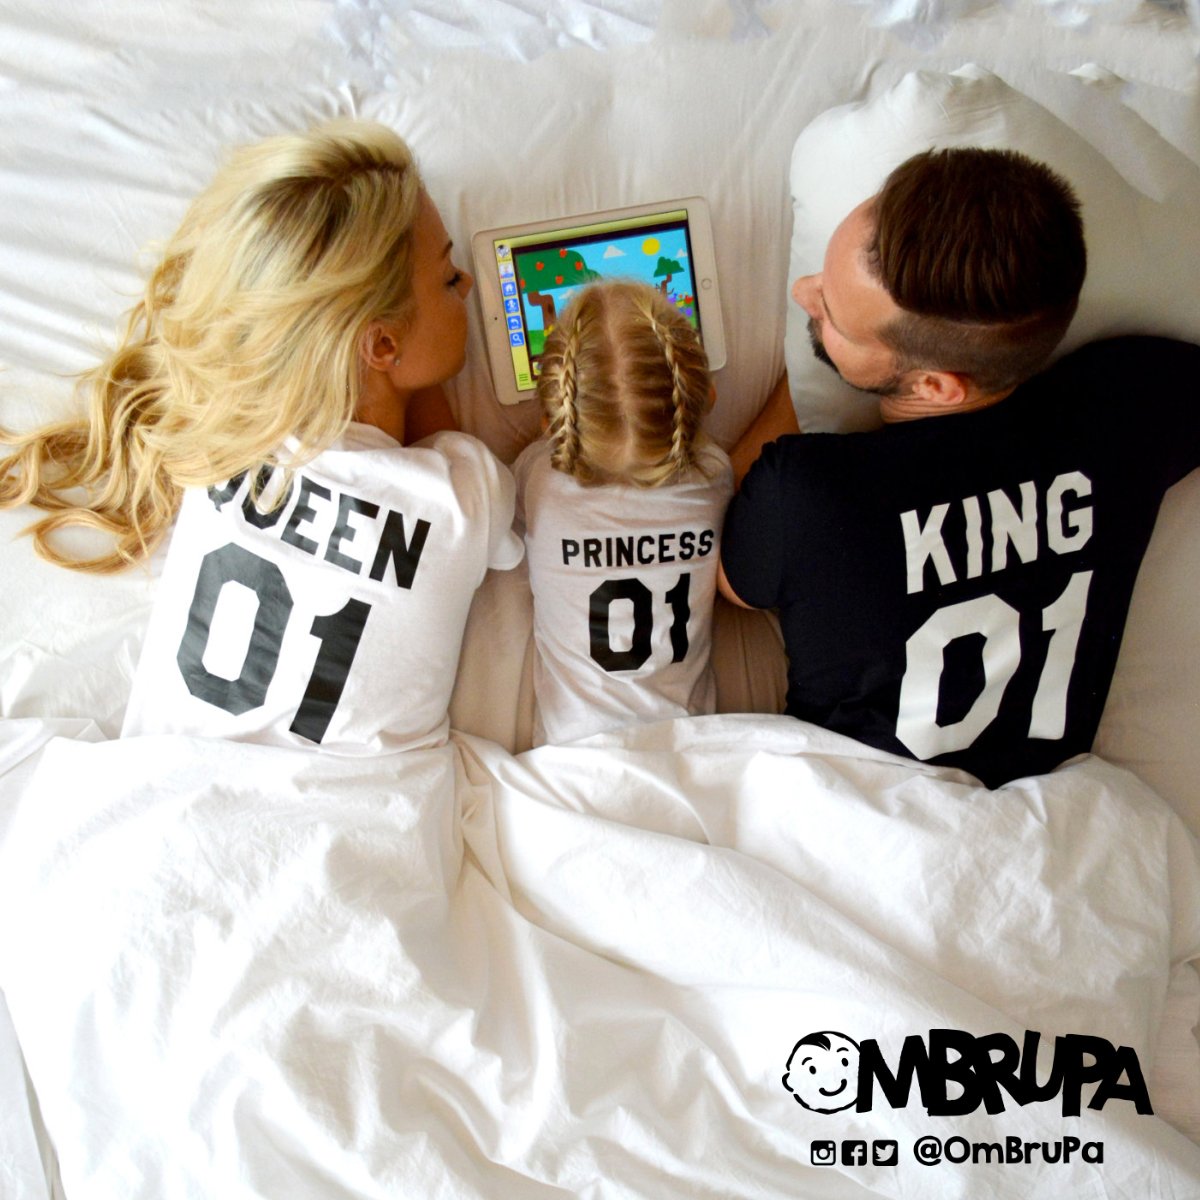 OmBruPa on Twitter: "#Camisetas #Personalizadas #Familia #Queen # Princess #Amor https://t.co/1P3QZow4KS" / Twitter